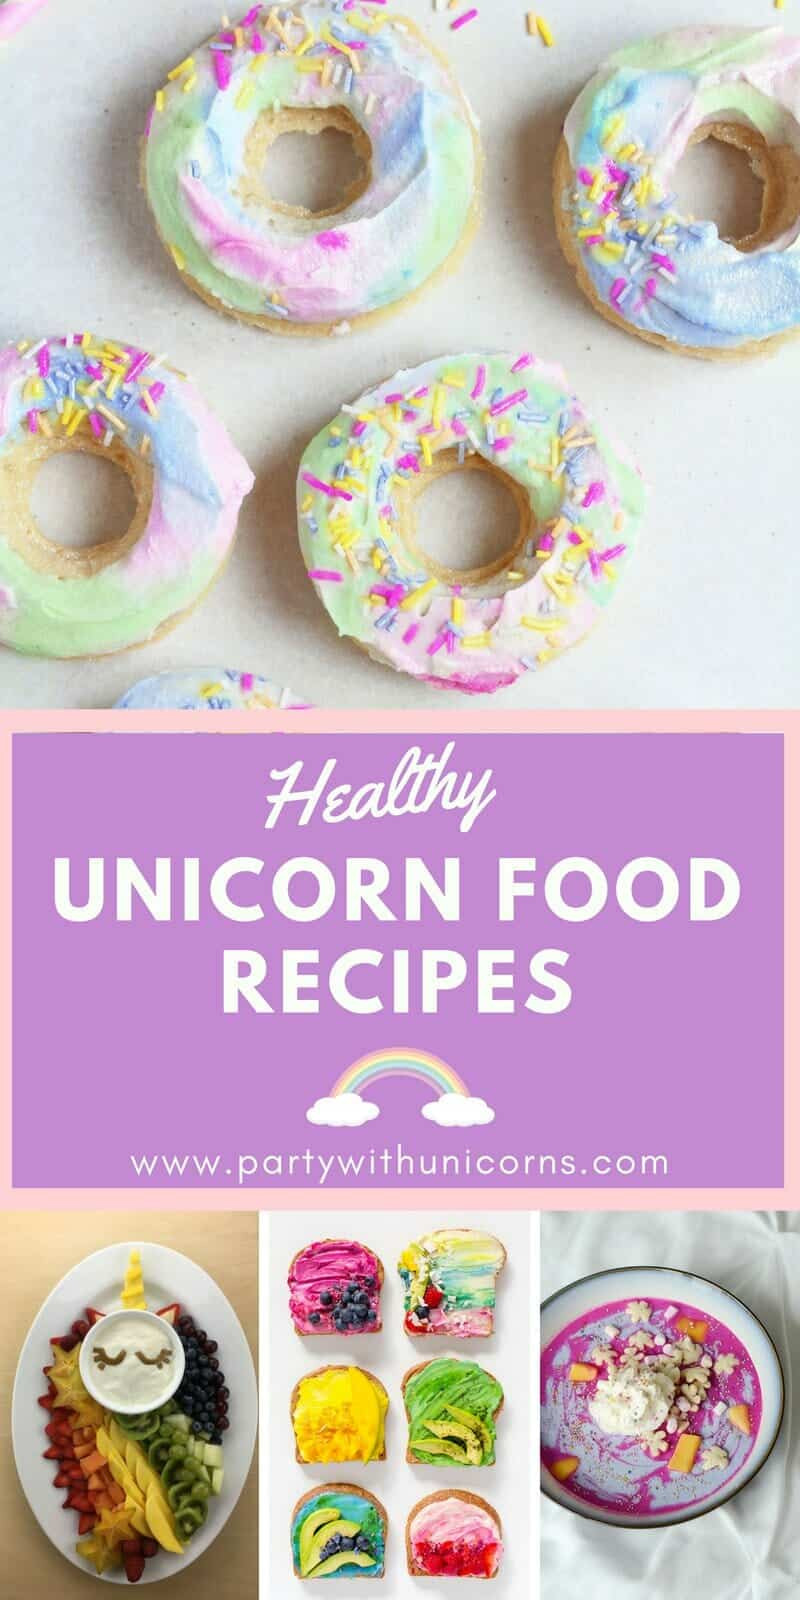 Kids Unicorn Party Food Ideas
 Healthy Unicorn Foods